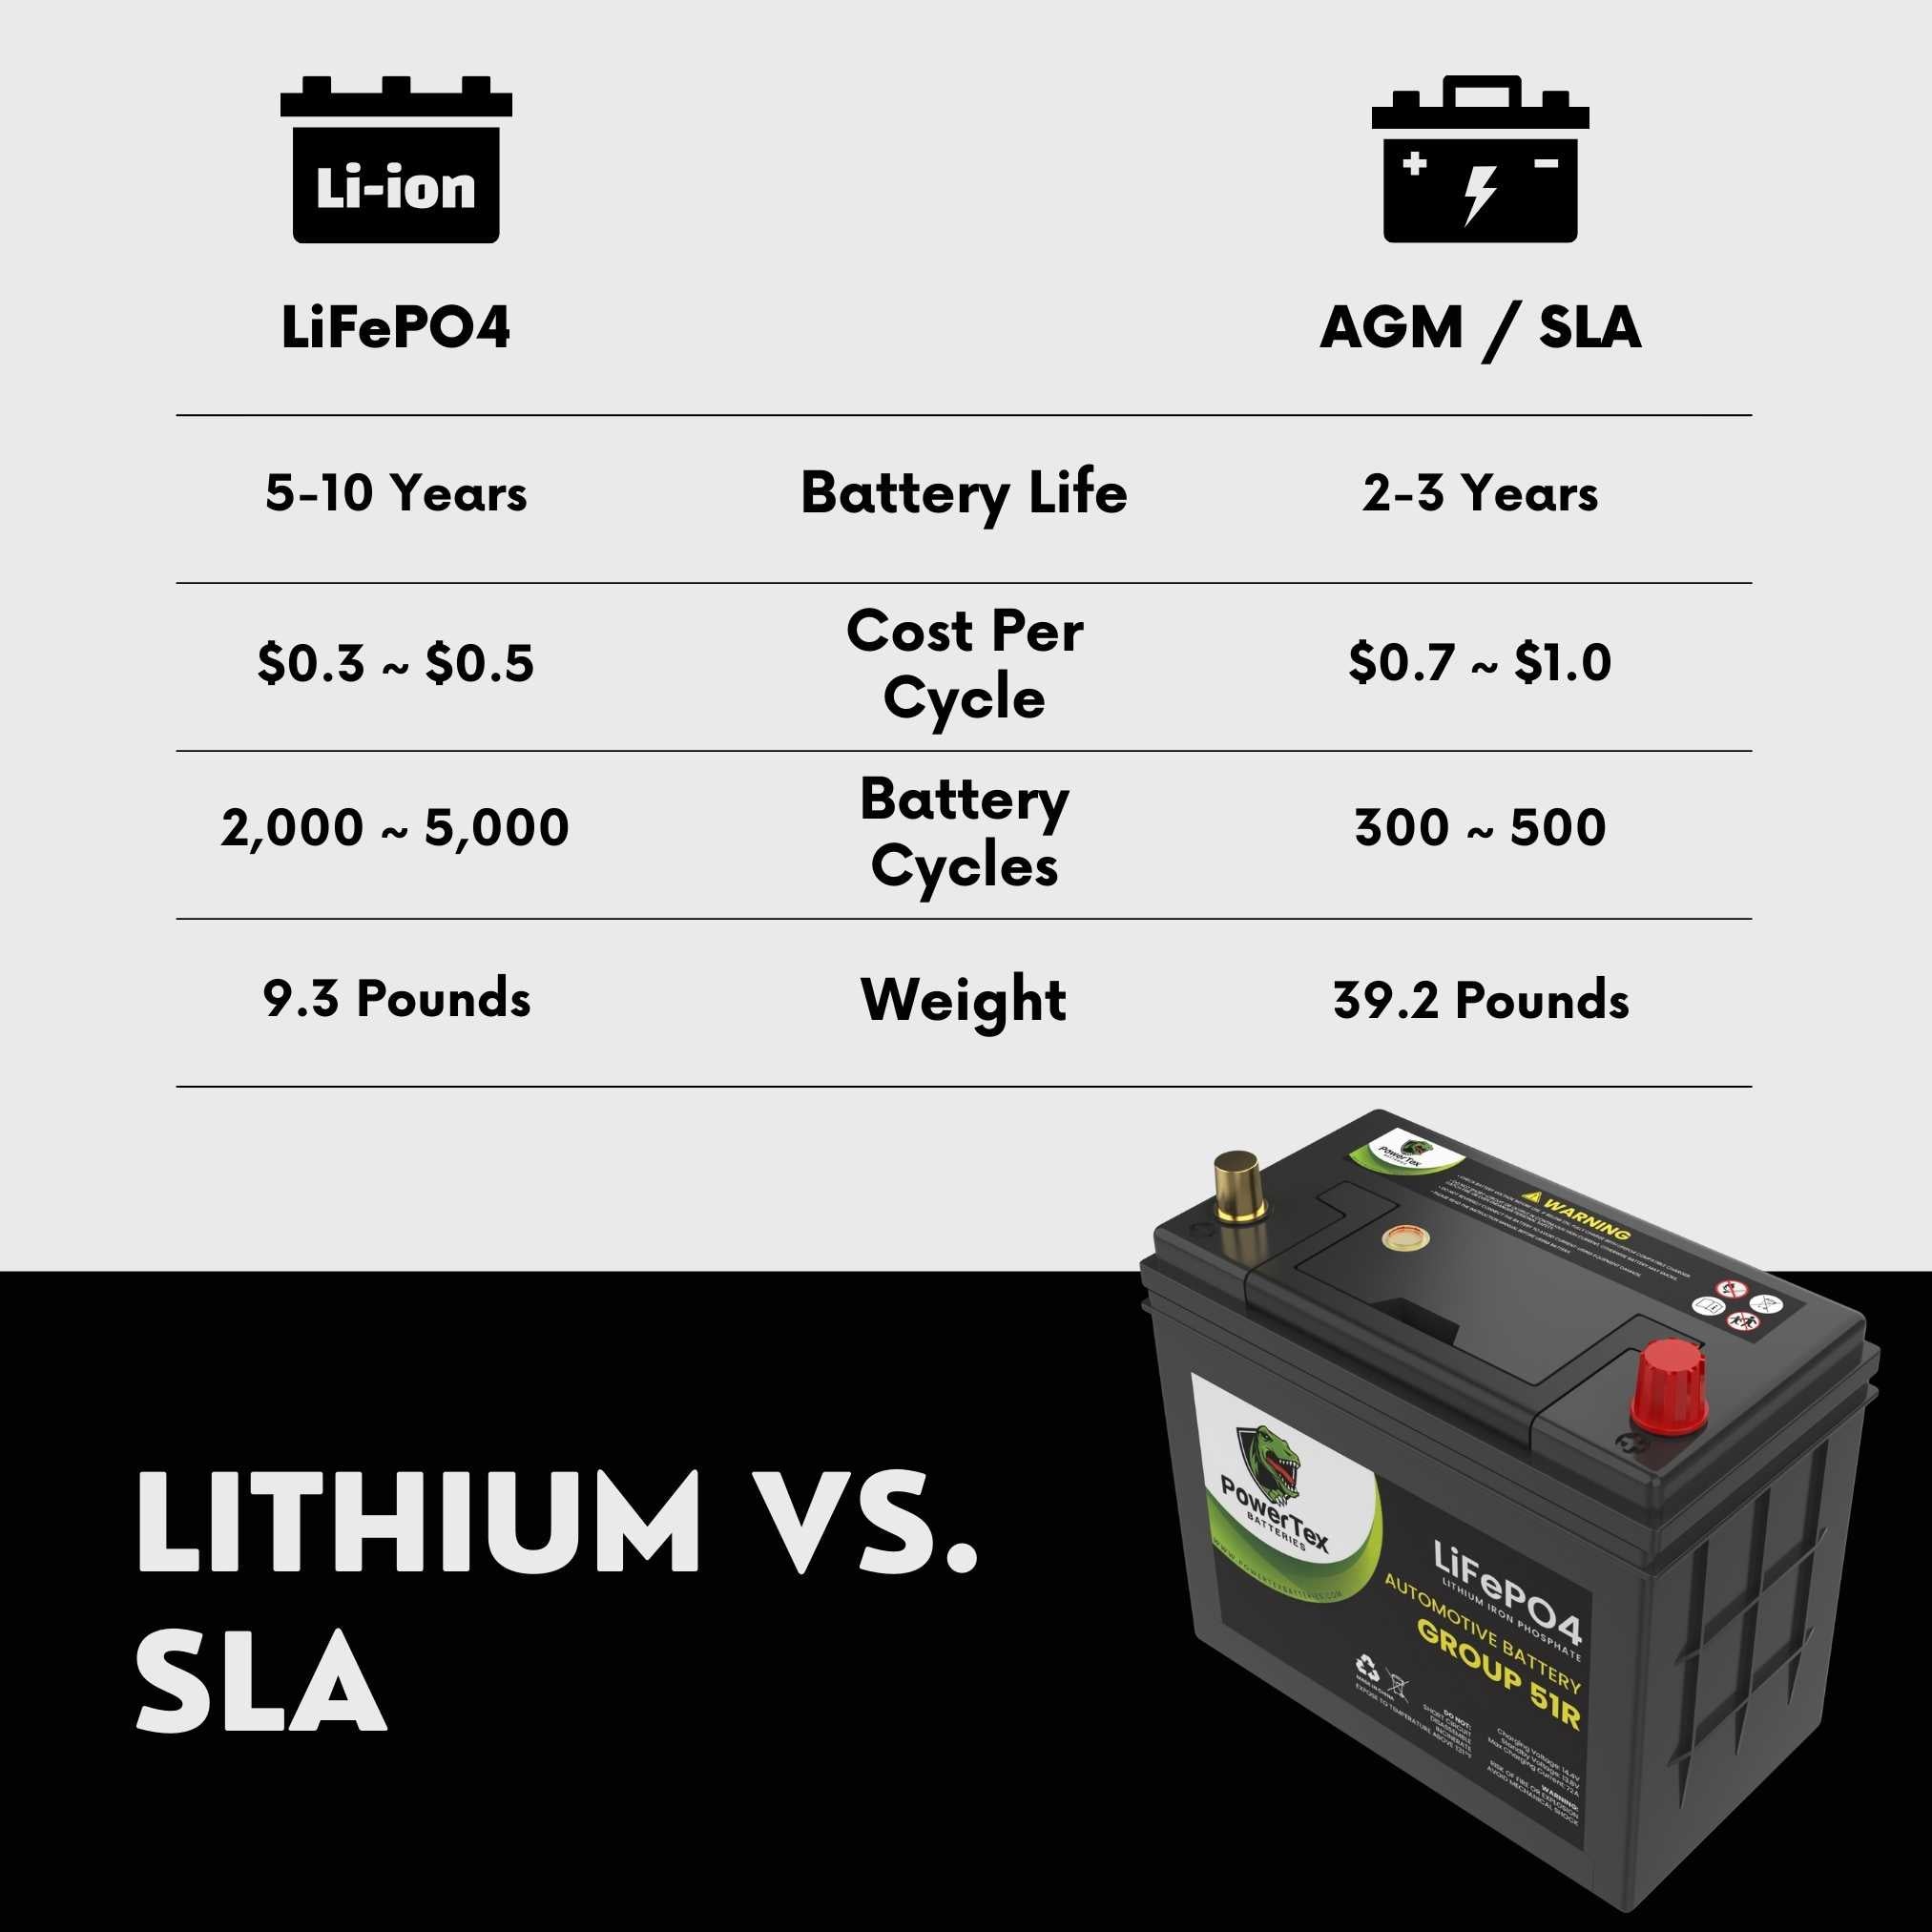 2015 Honda Accord Car Battery BCI Group 51R Lithium LiFePO4 Automotive Battery